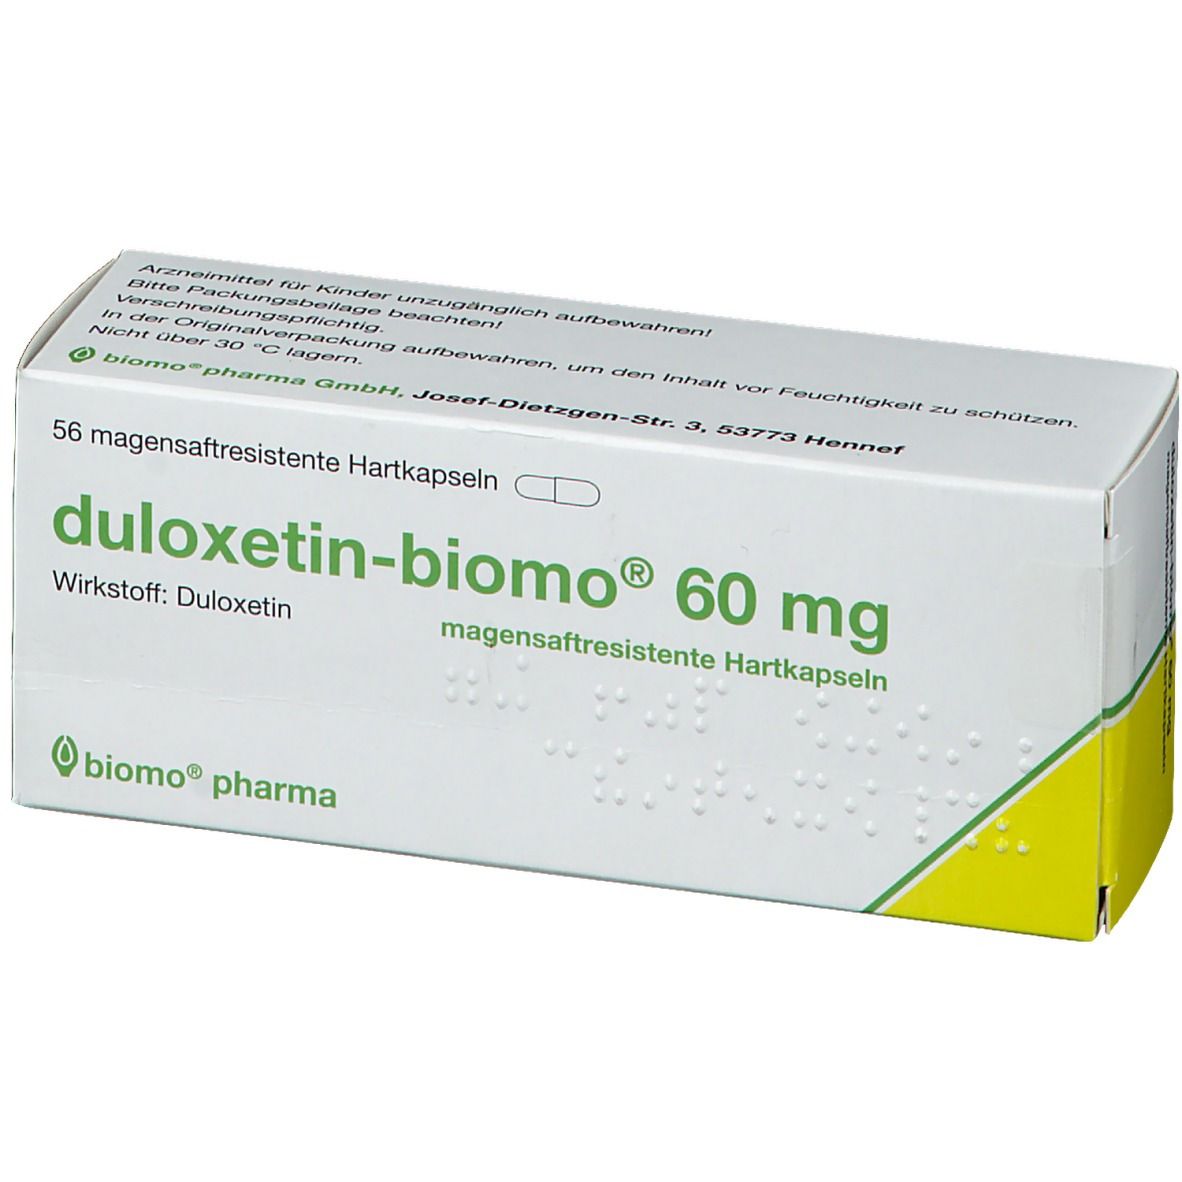 duloxetin-biomo® 60 mg